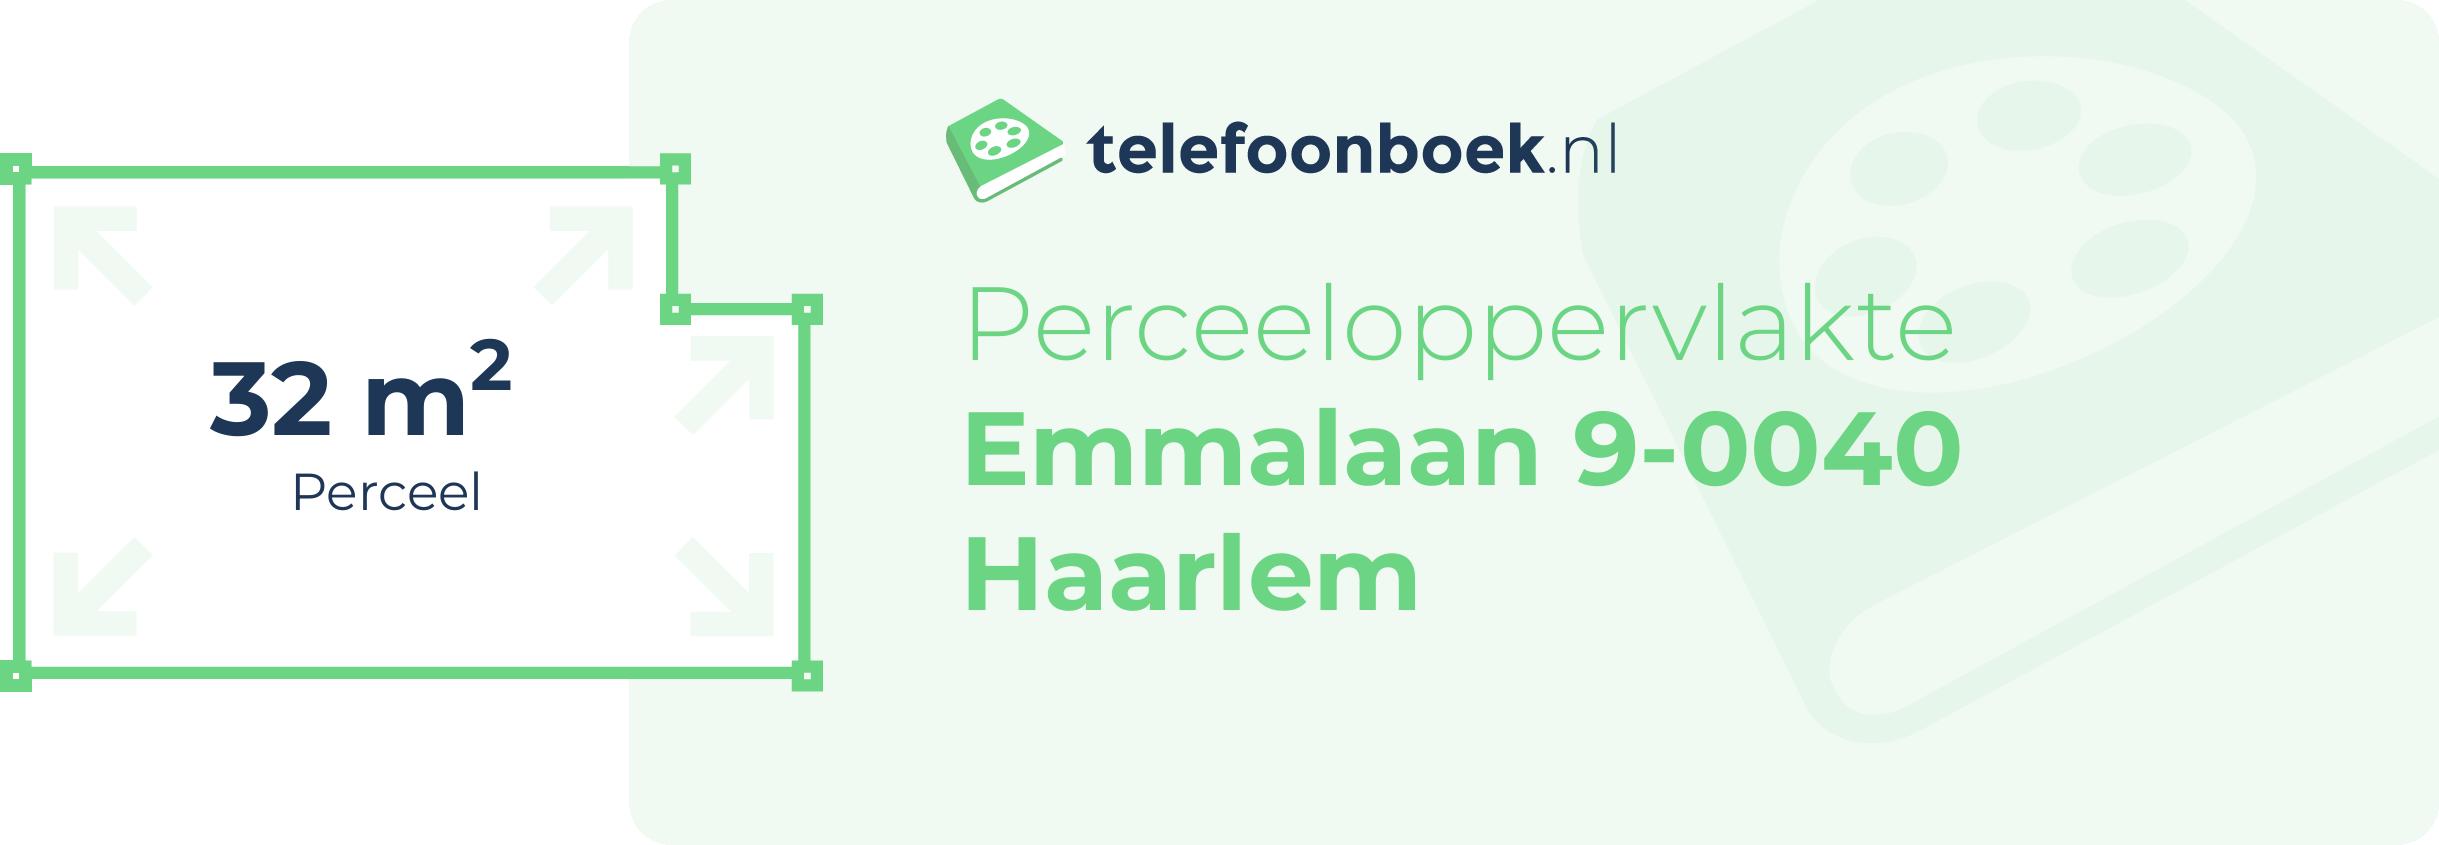 Perceeloppervlakte Emmalaan 9-0040 Haarlem